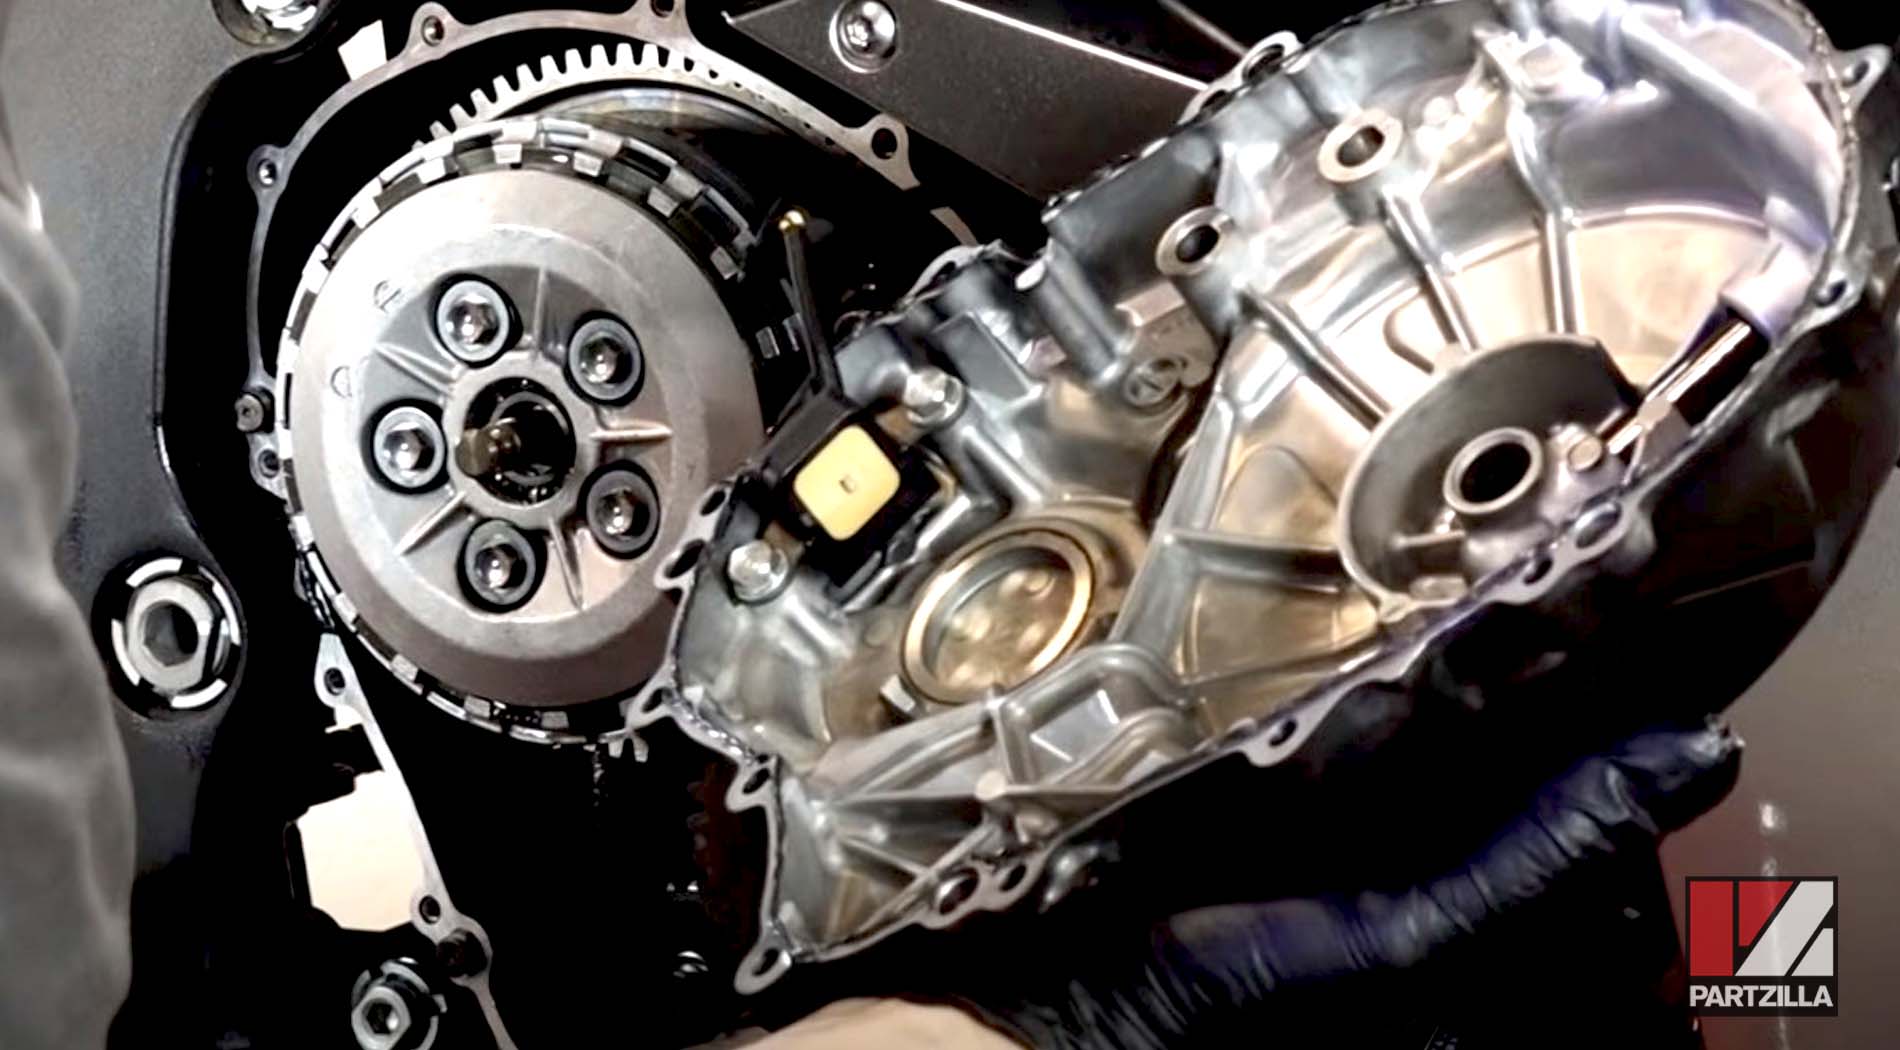 Honda motorcycle clutch rebuild assembly